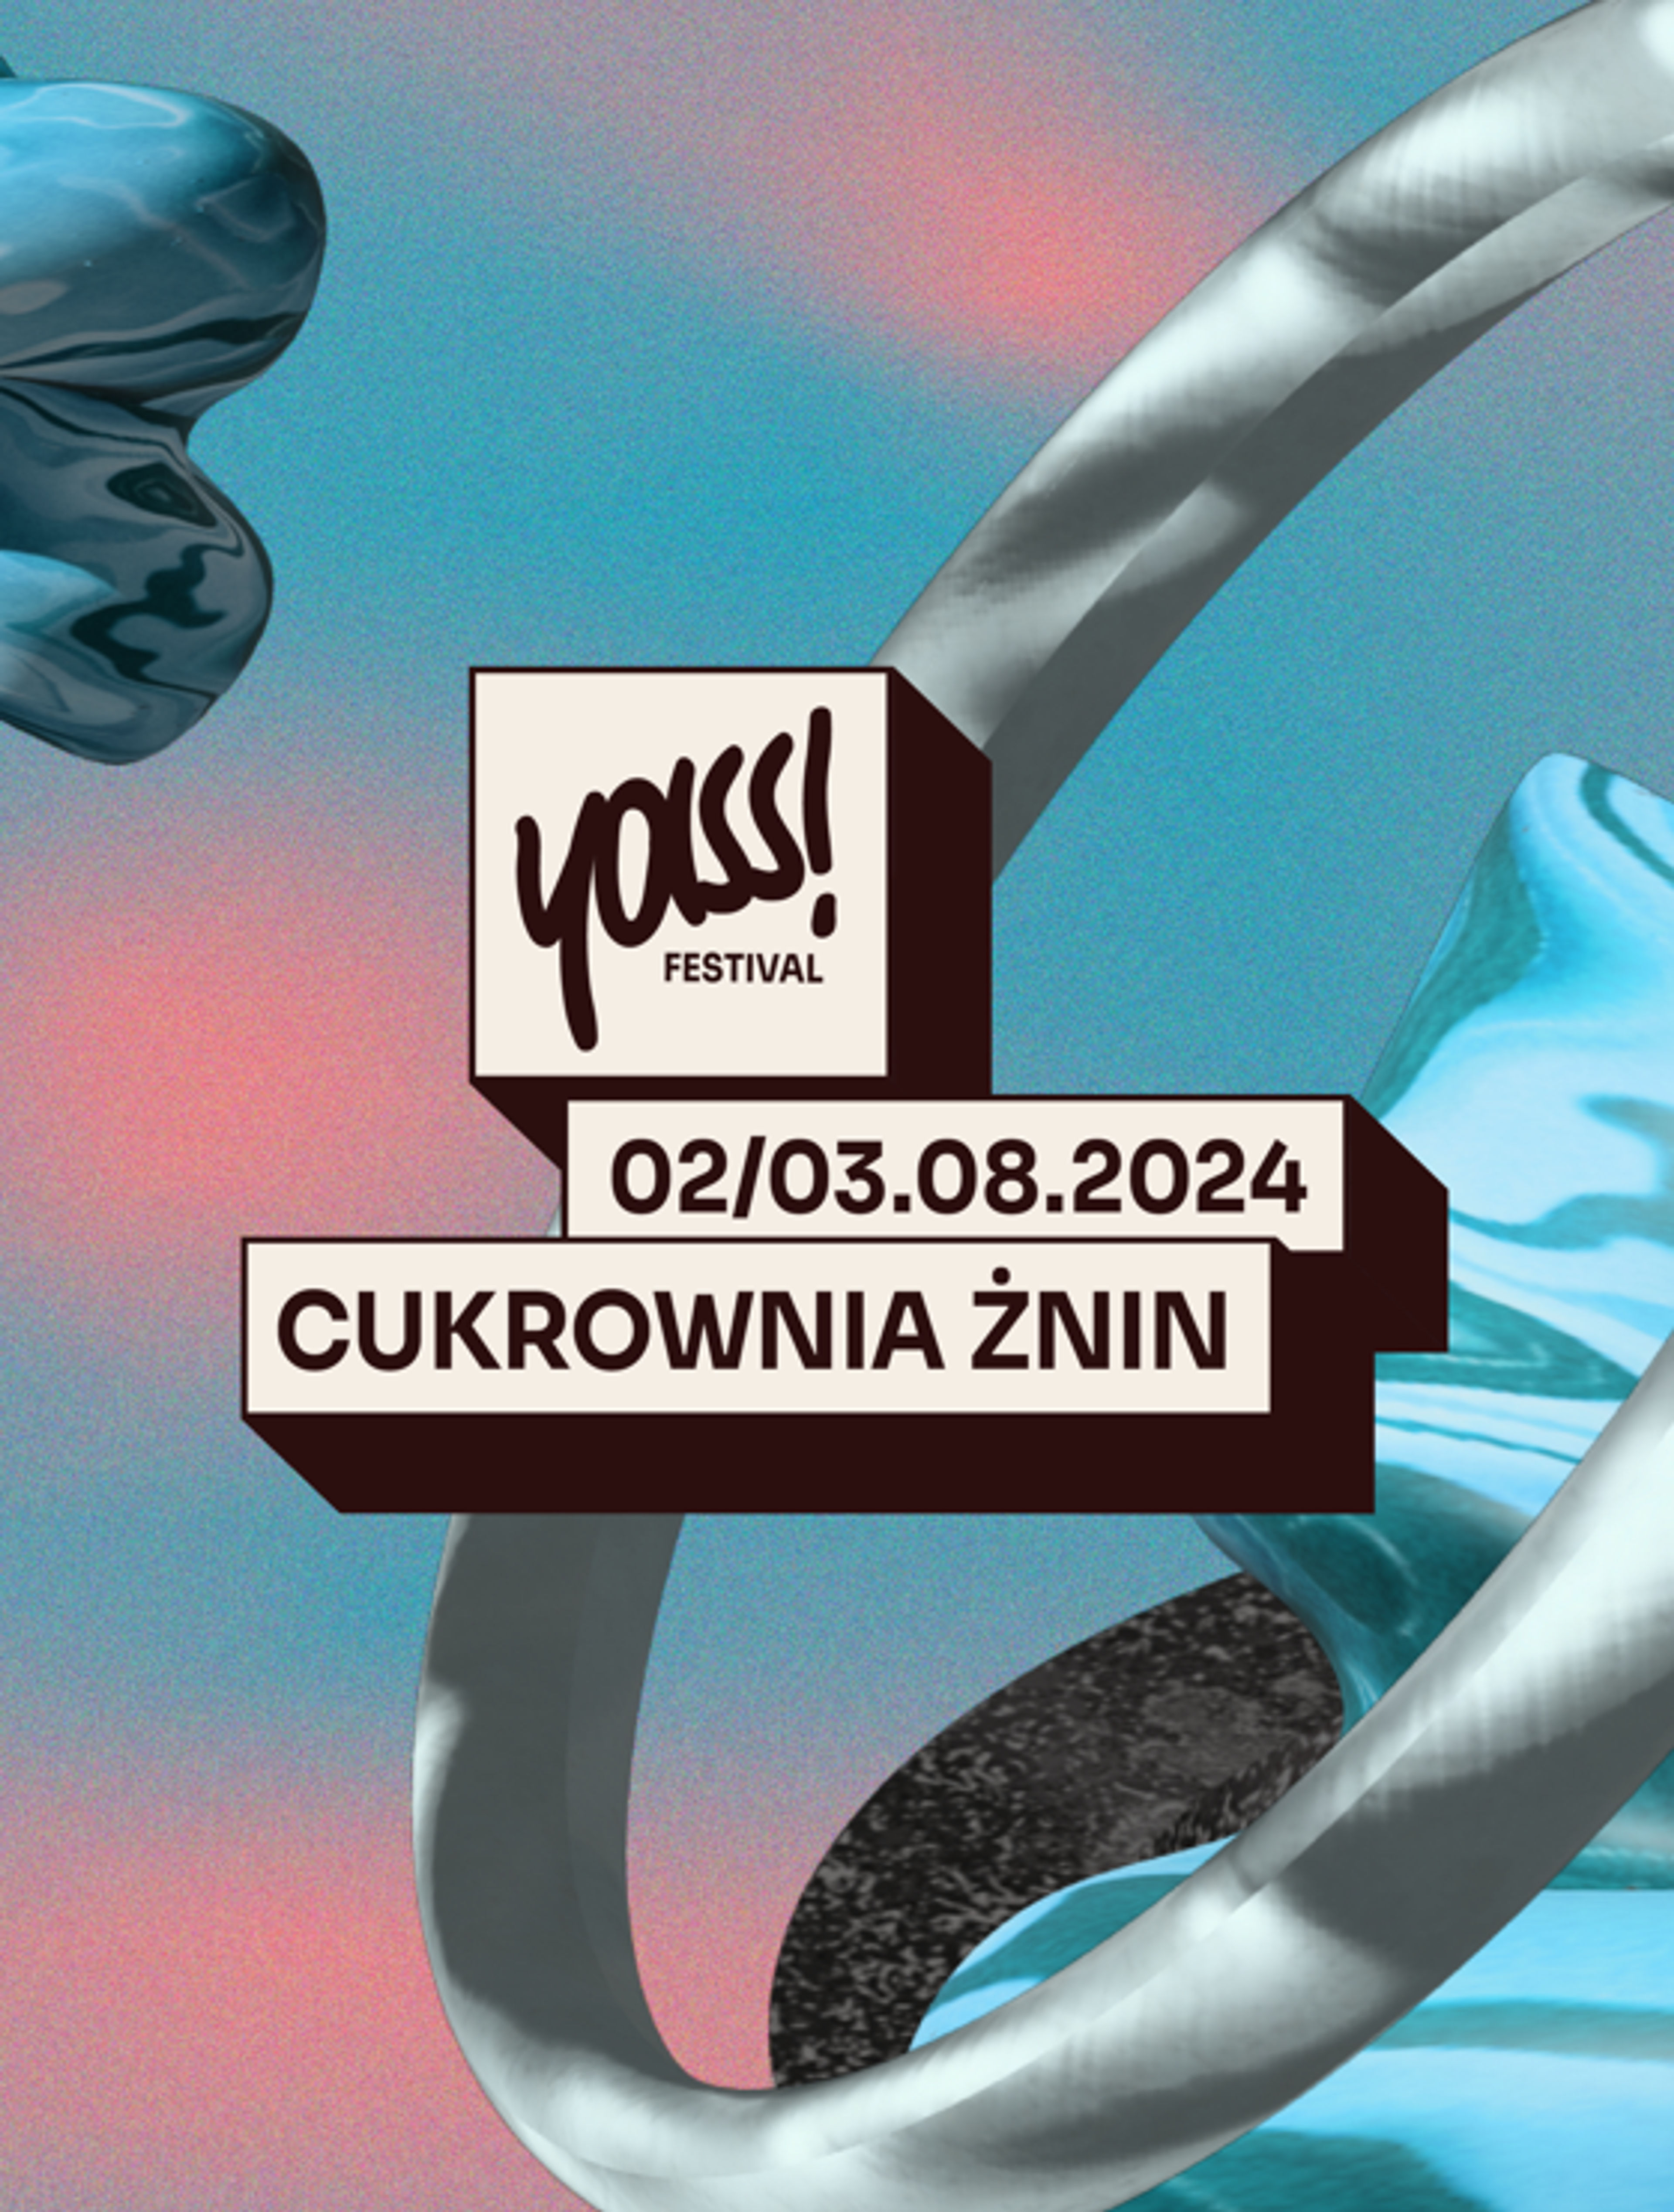 Plakat wydarzenia "YASS! Festival @Cukrownia Żnin"